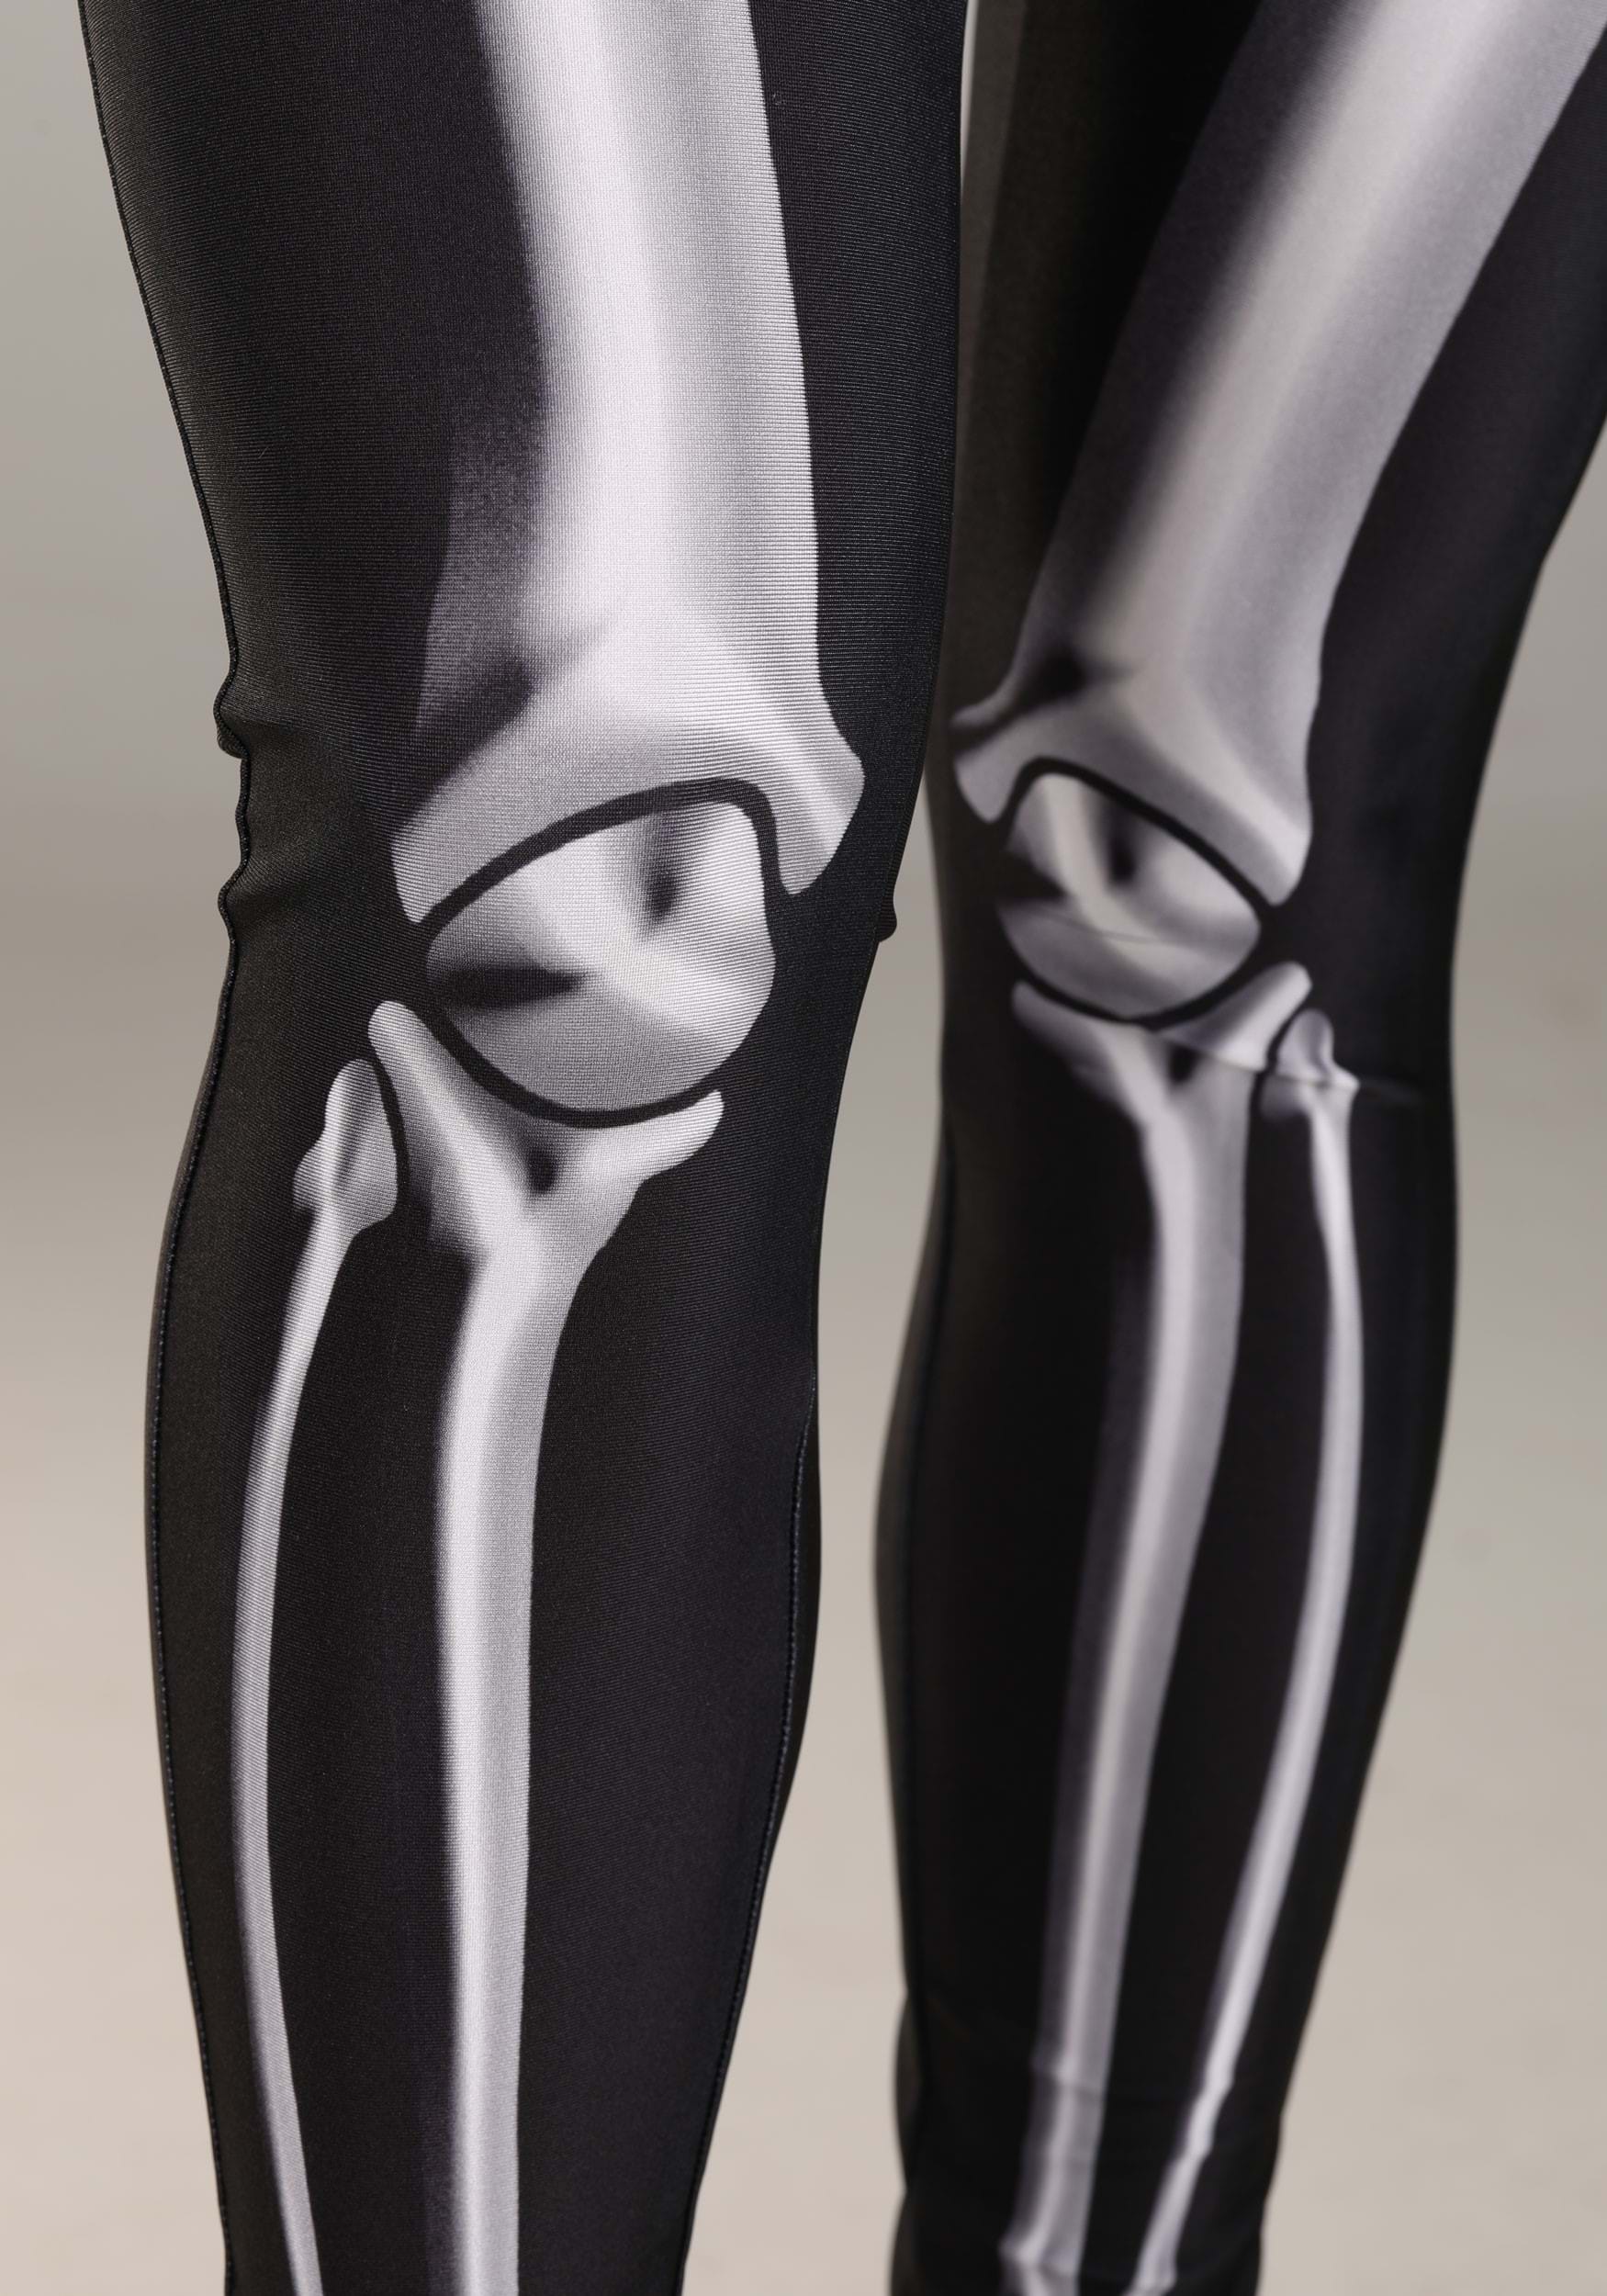 Metallic Silver Skeleton Adult Costume